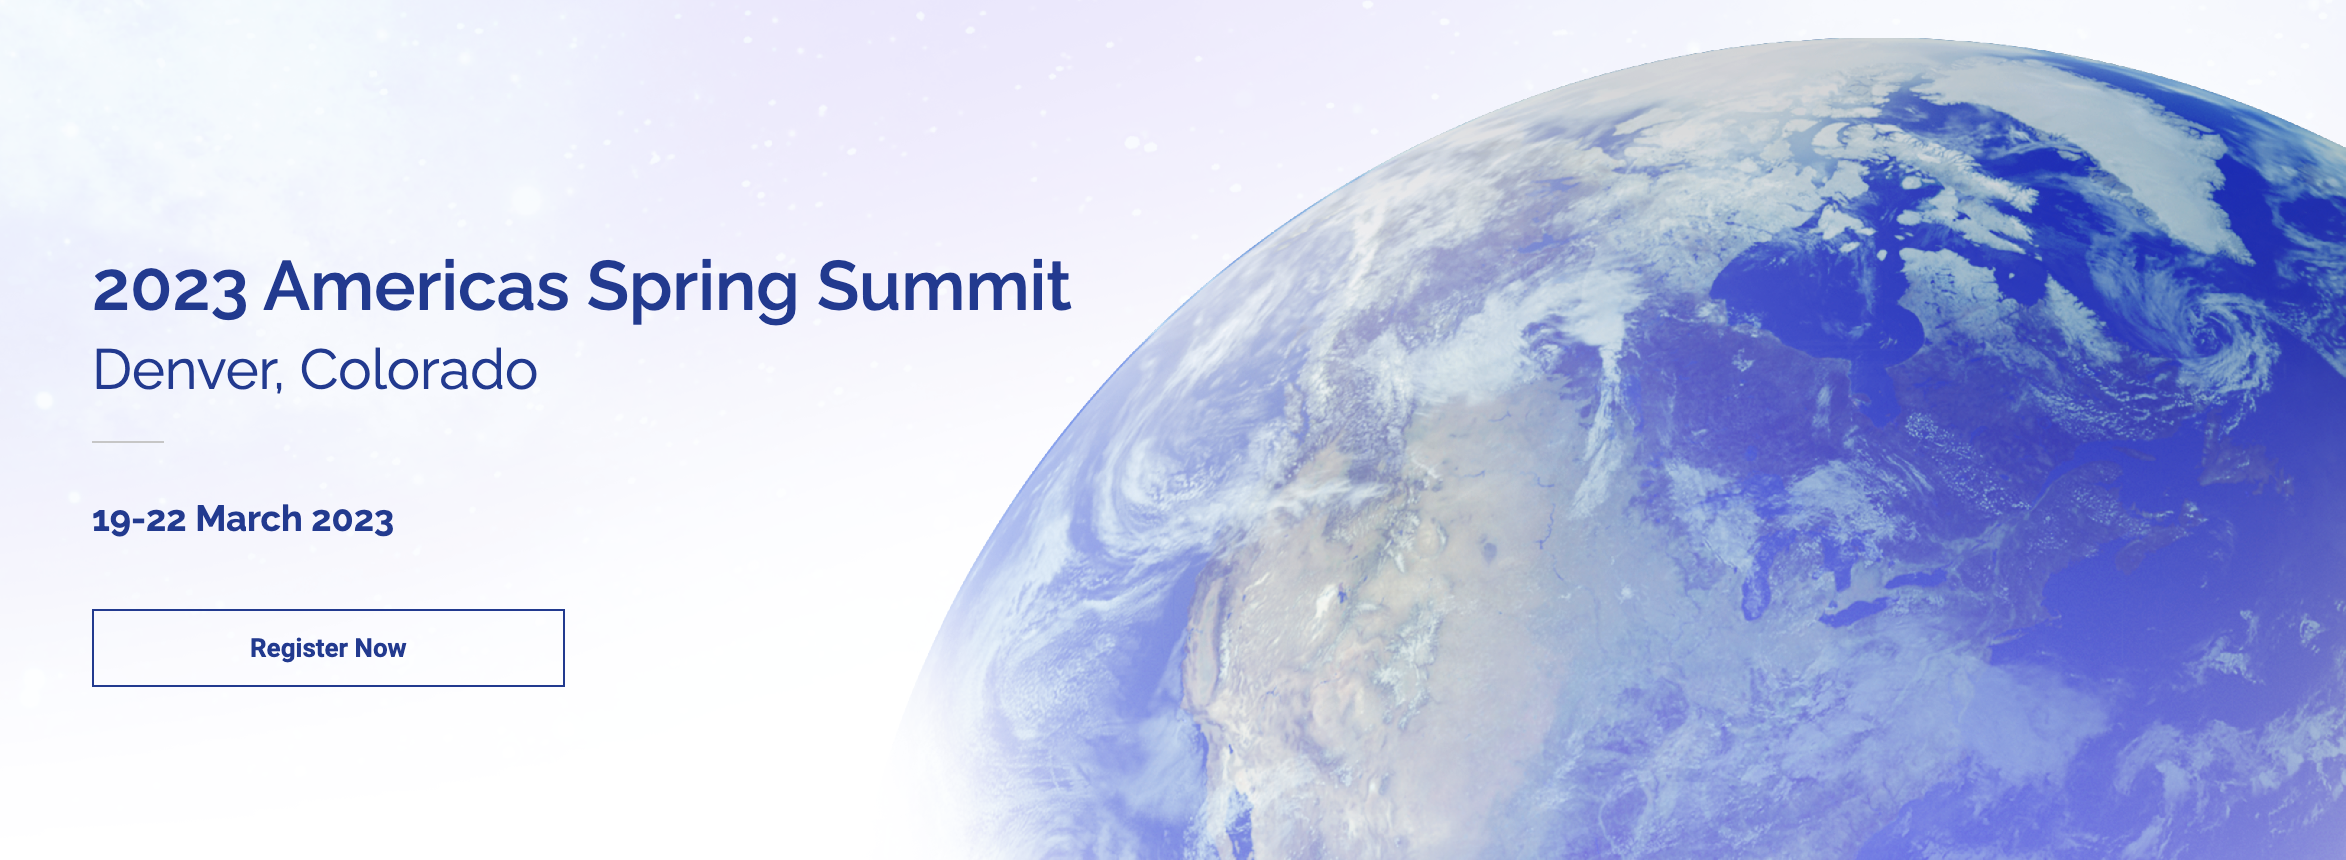 America's Spring Summit - FS-ISAC